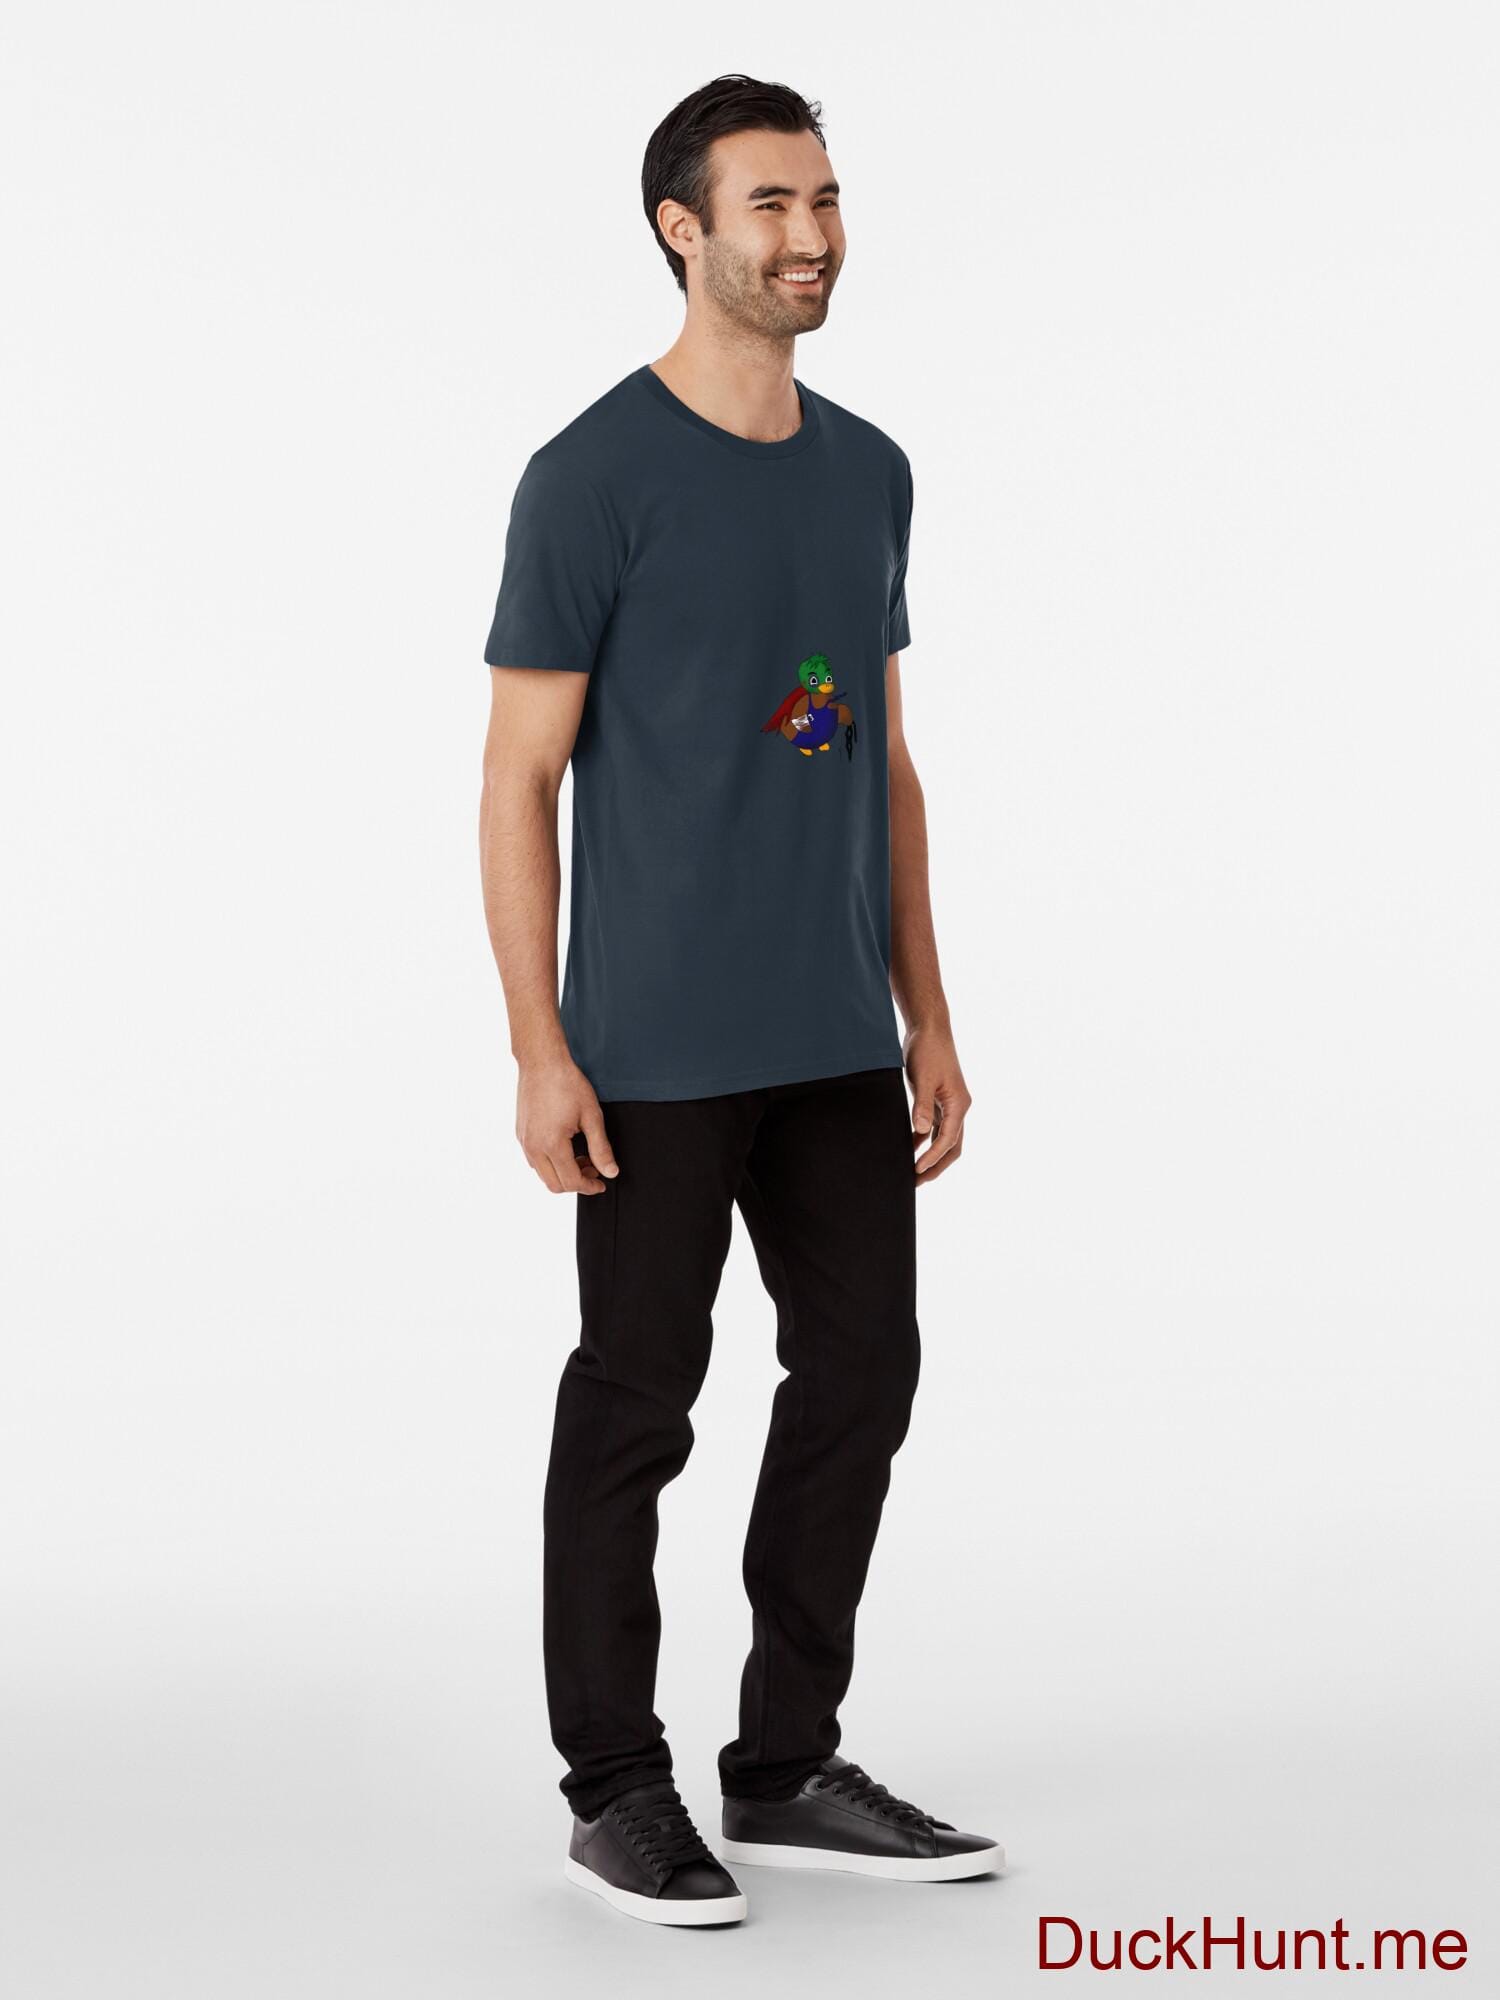 Dead DuckHunt Boss (smokeless) Navy Premium T-Shirt (Front printed) alternative image 2